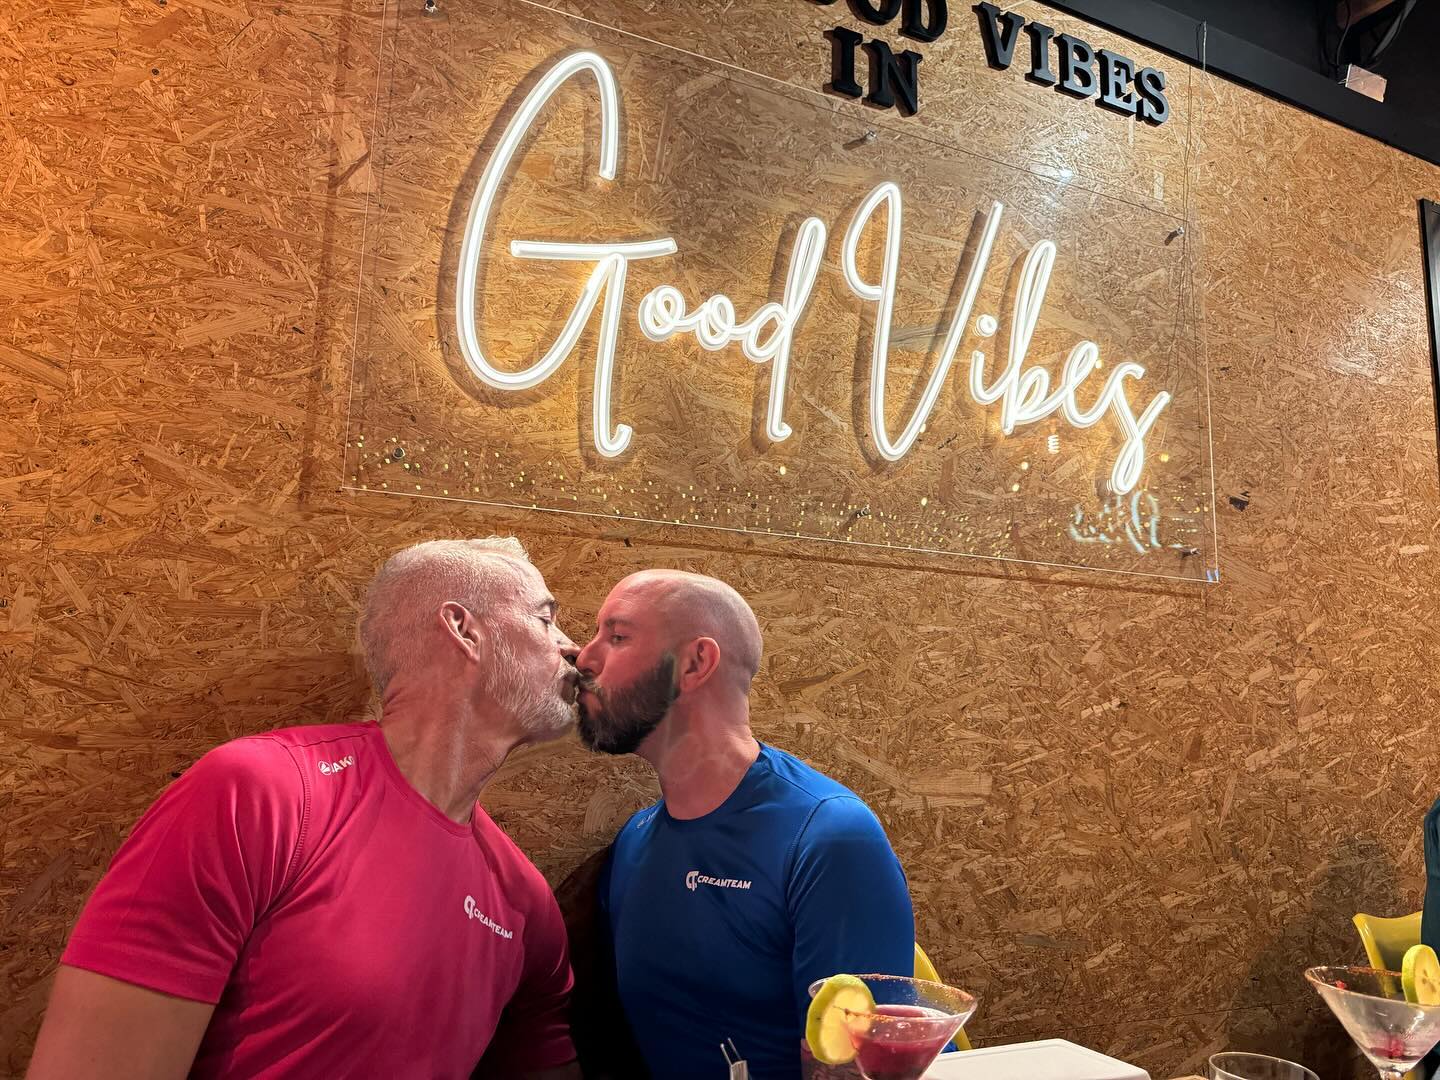 Only good vibes with @sloppy_joeyy 

#holiday #gay #maspalomaspride #grancanaria #gaycouple #silverfox #goodvibes